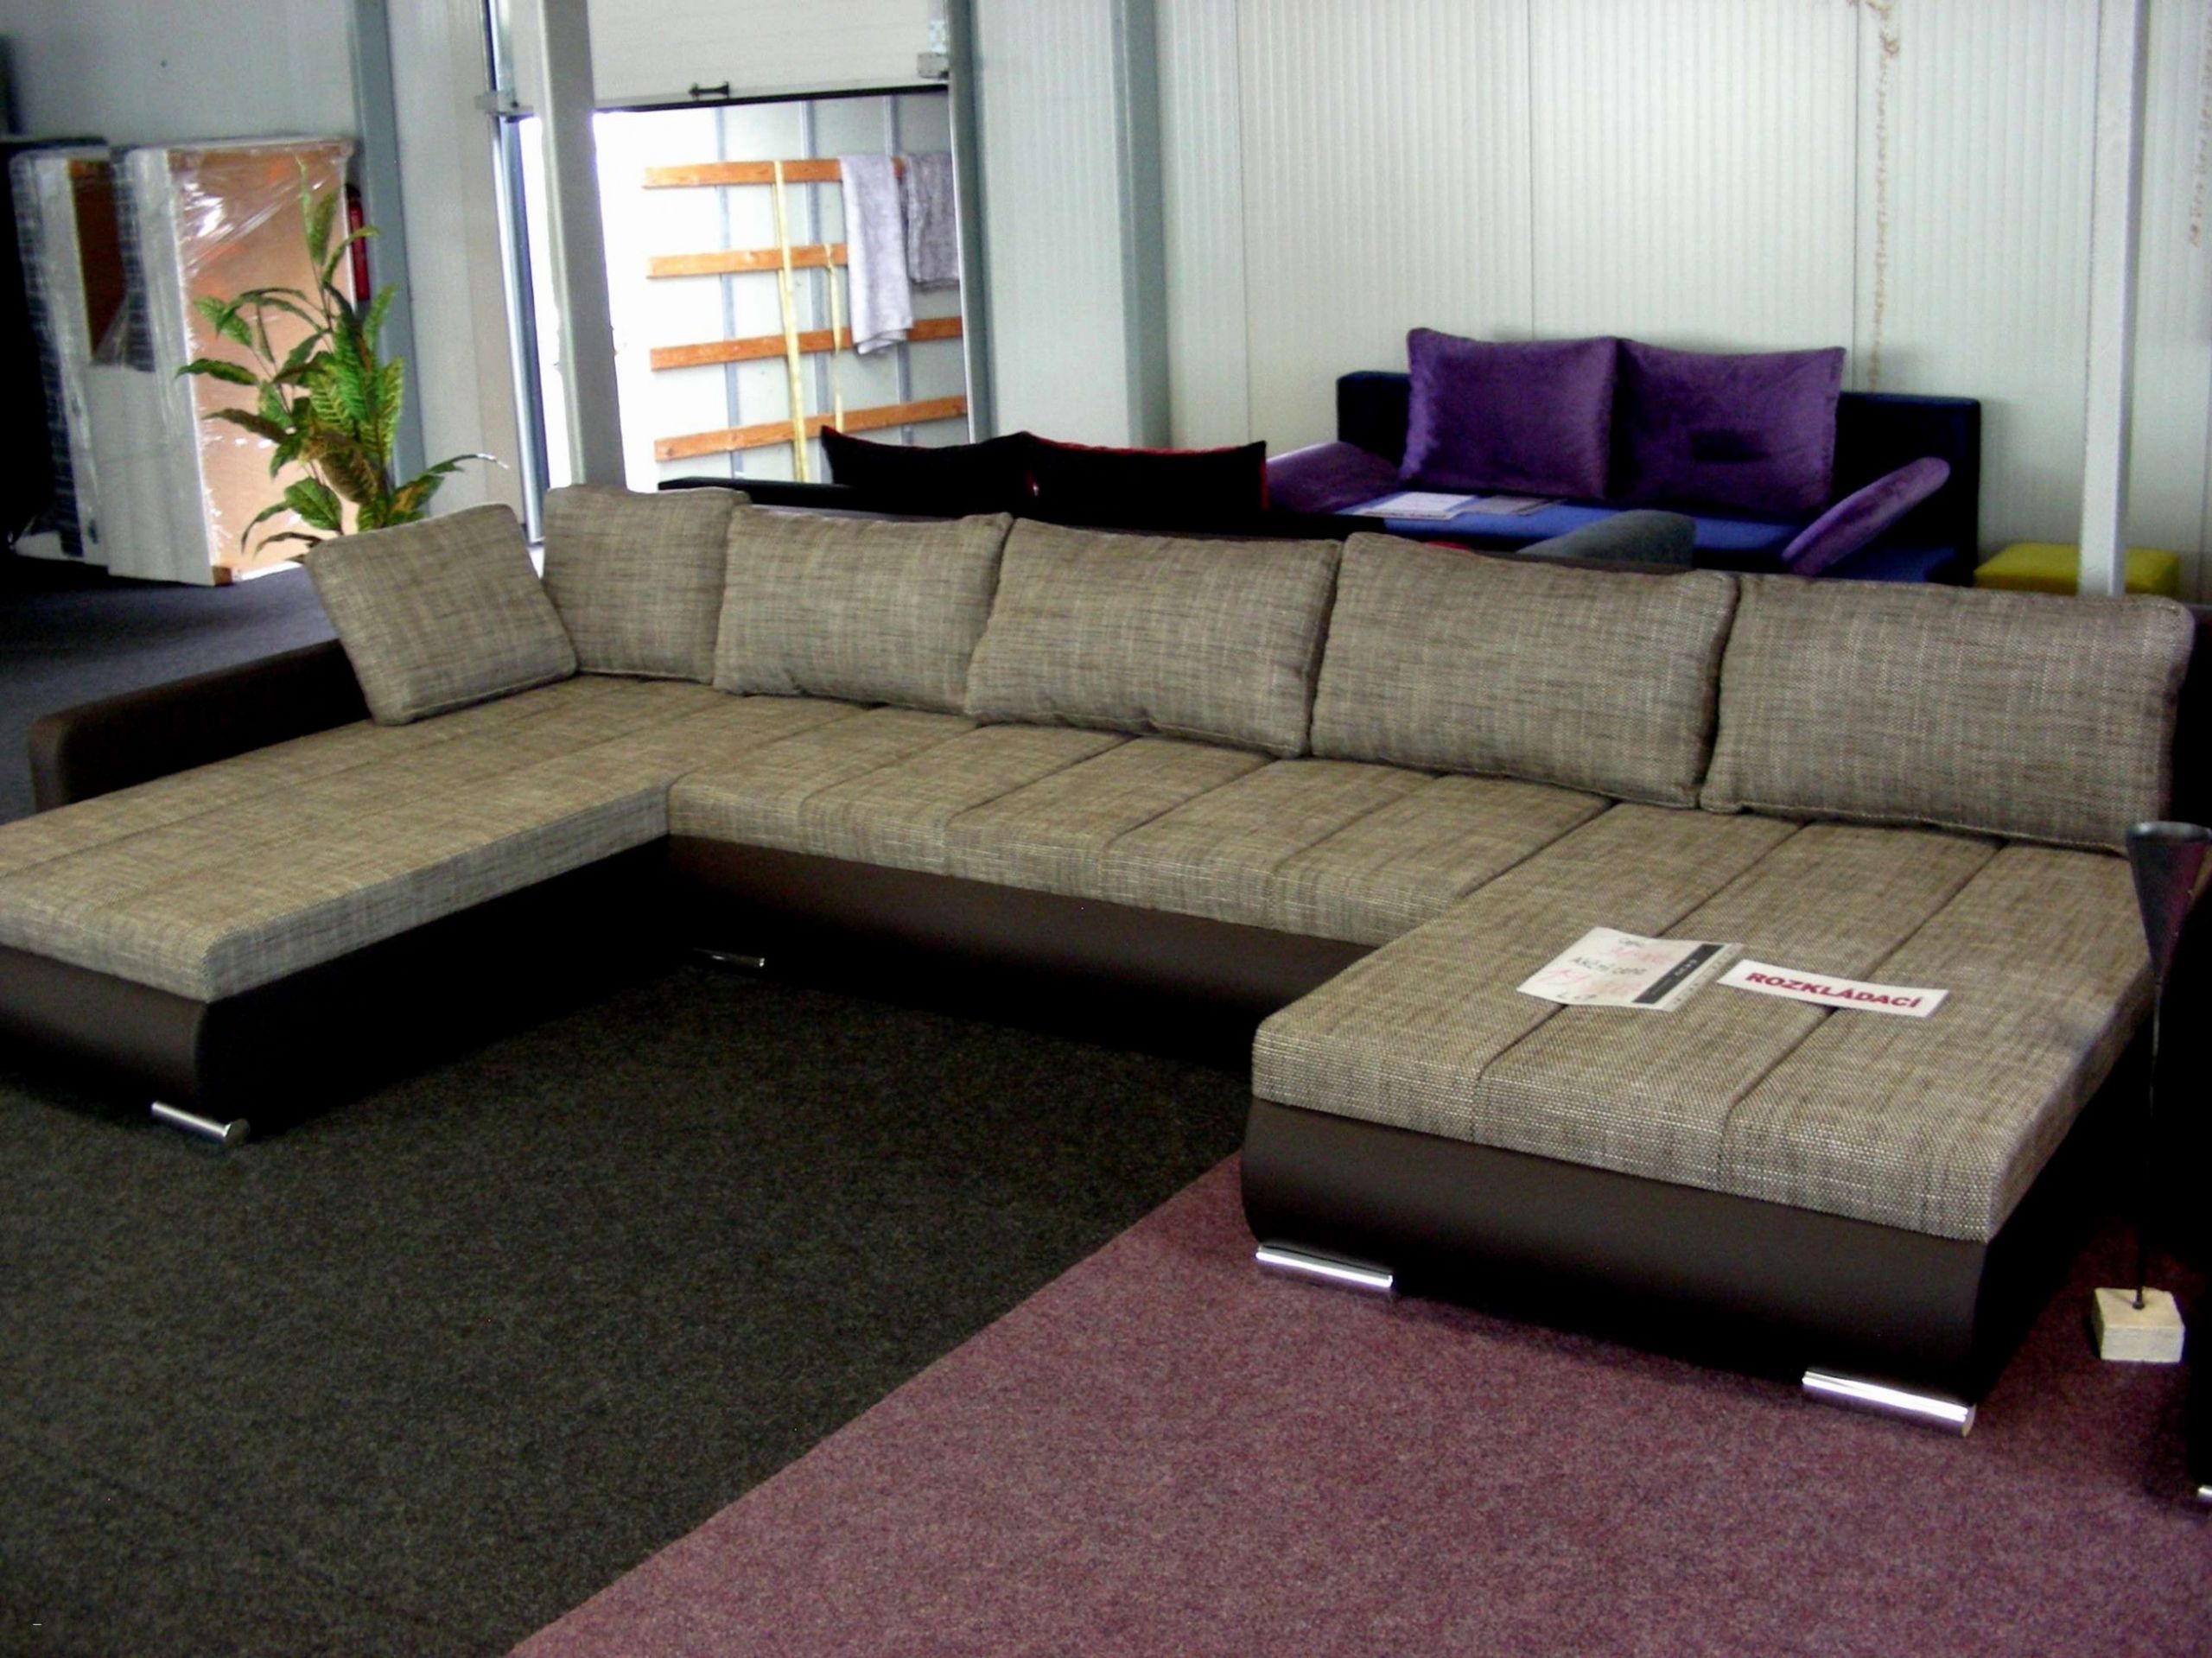 rooms outdoors elegant flur design ideen frisch sofa outdoor 0d